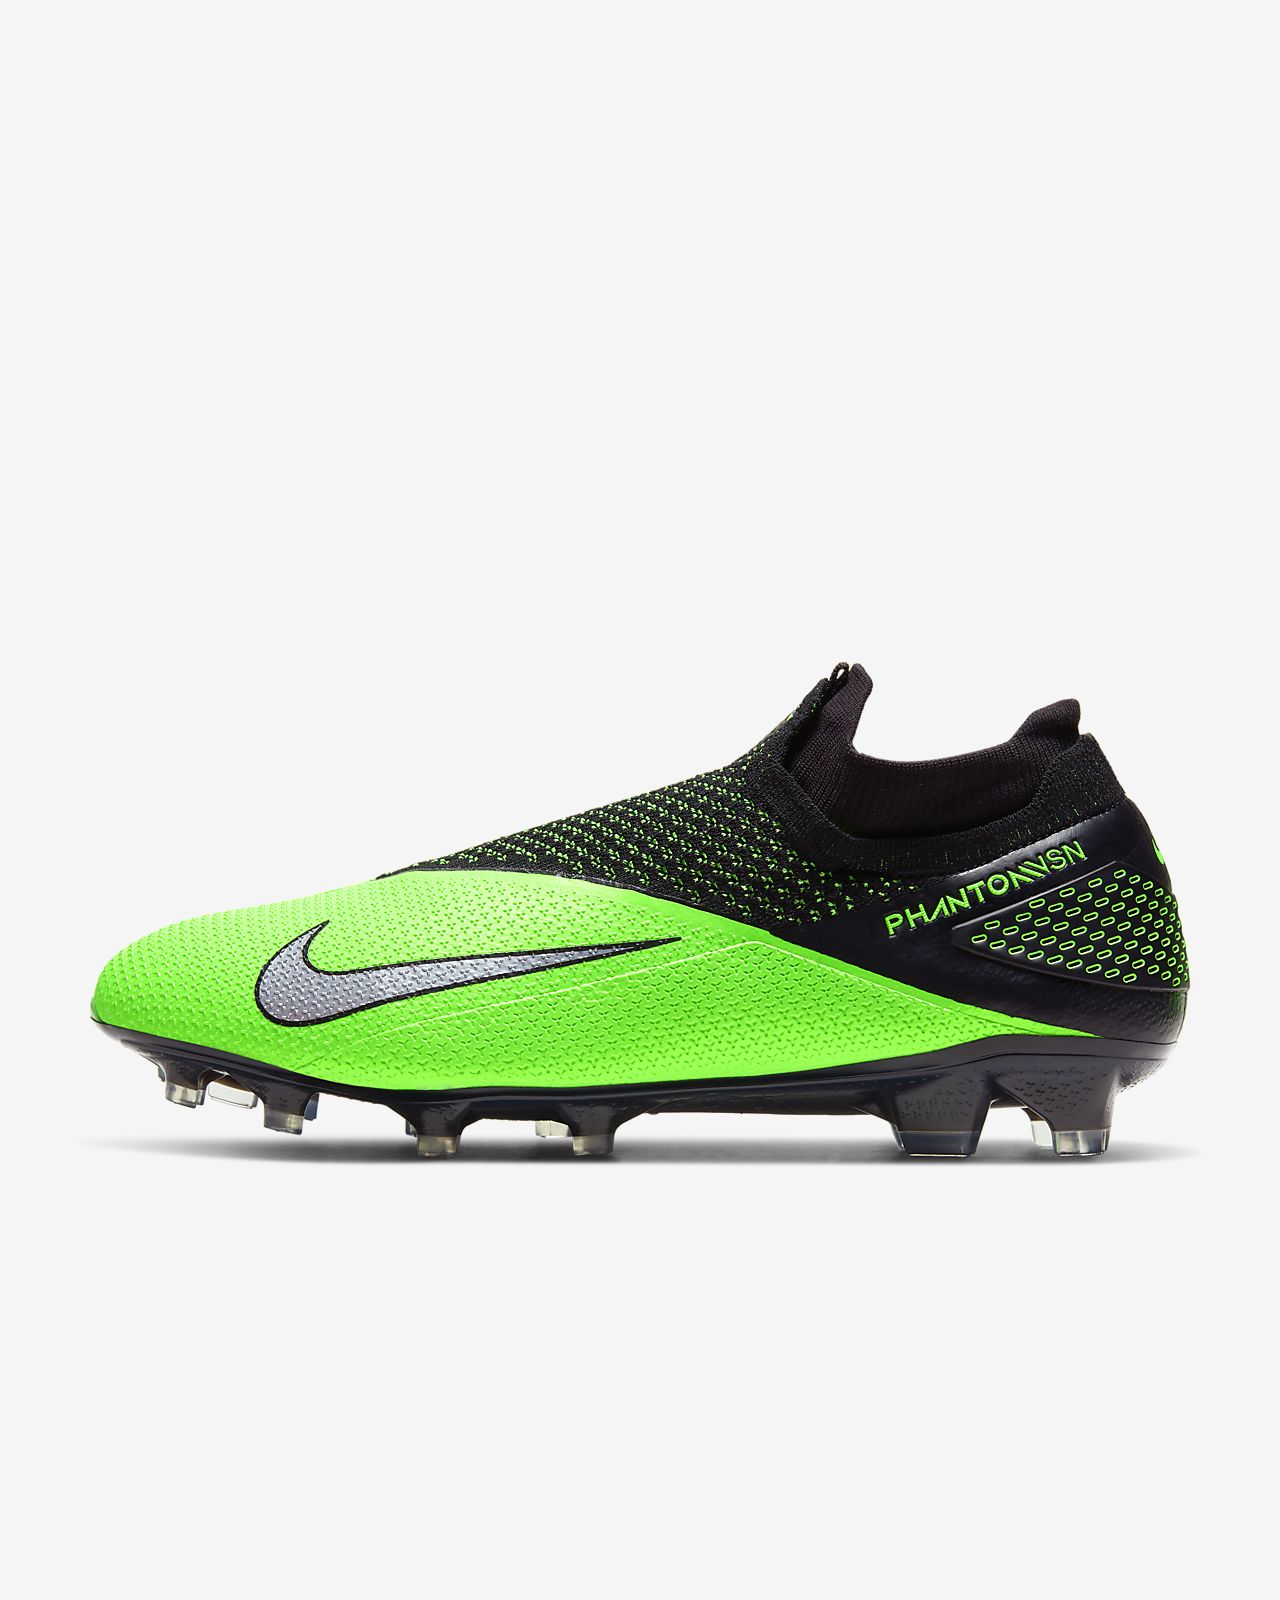 Fresh Nike Phantom Vision Pro Turf Soccer Shoe . Pinterest